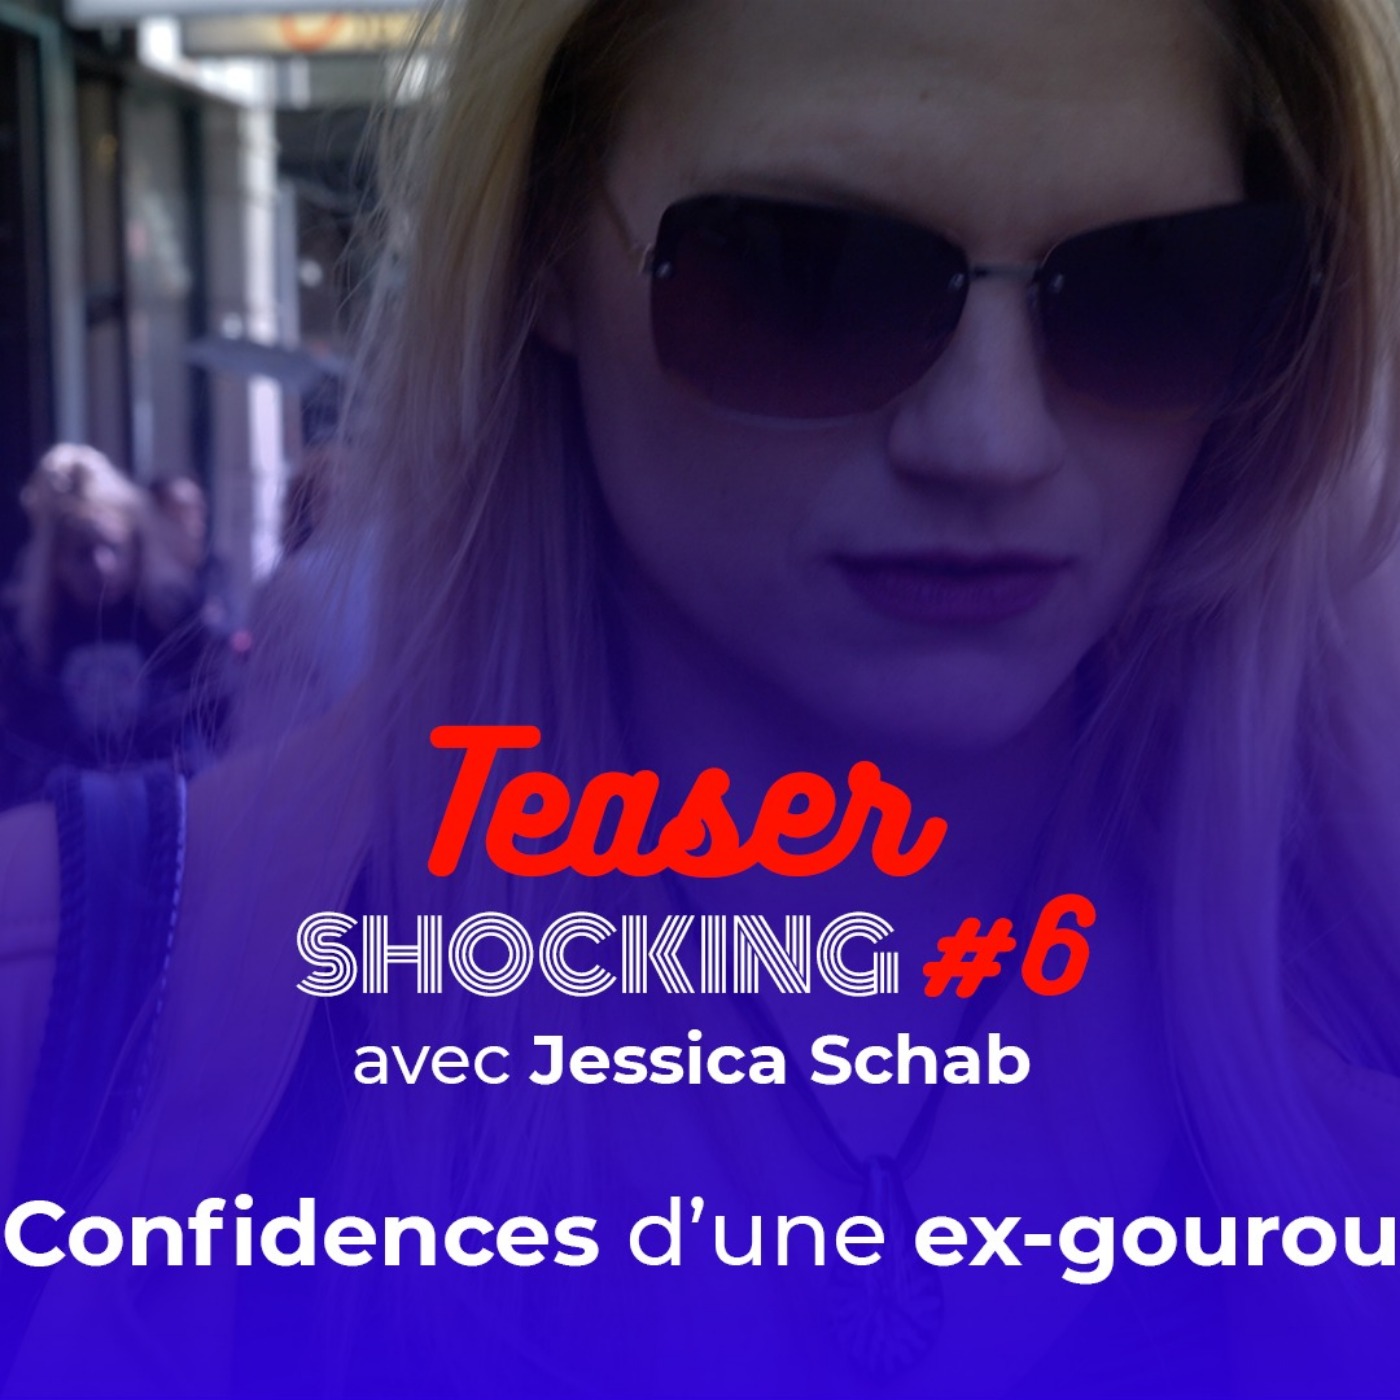 Confidences d'une ex-gourou (Teaser), avec Jessica Schab - SHOCKING #6